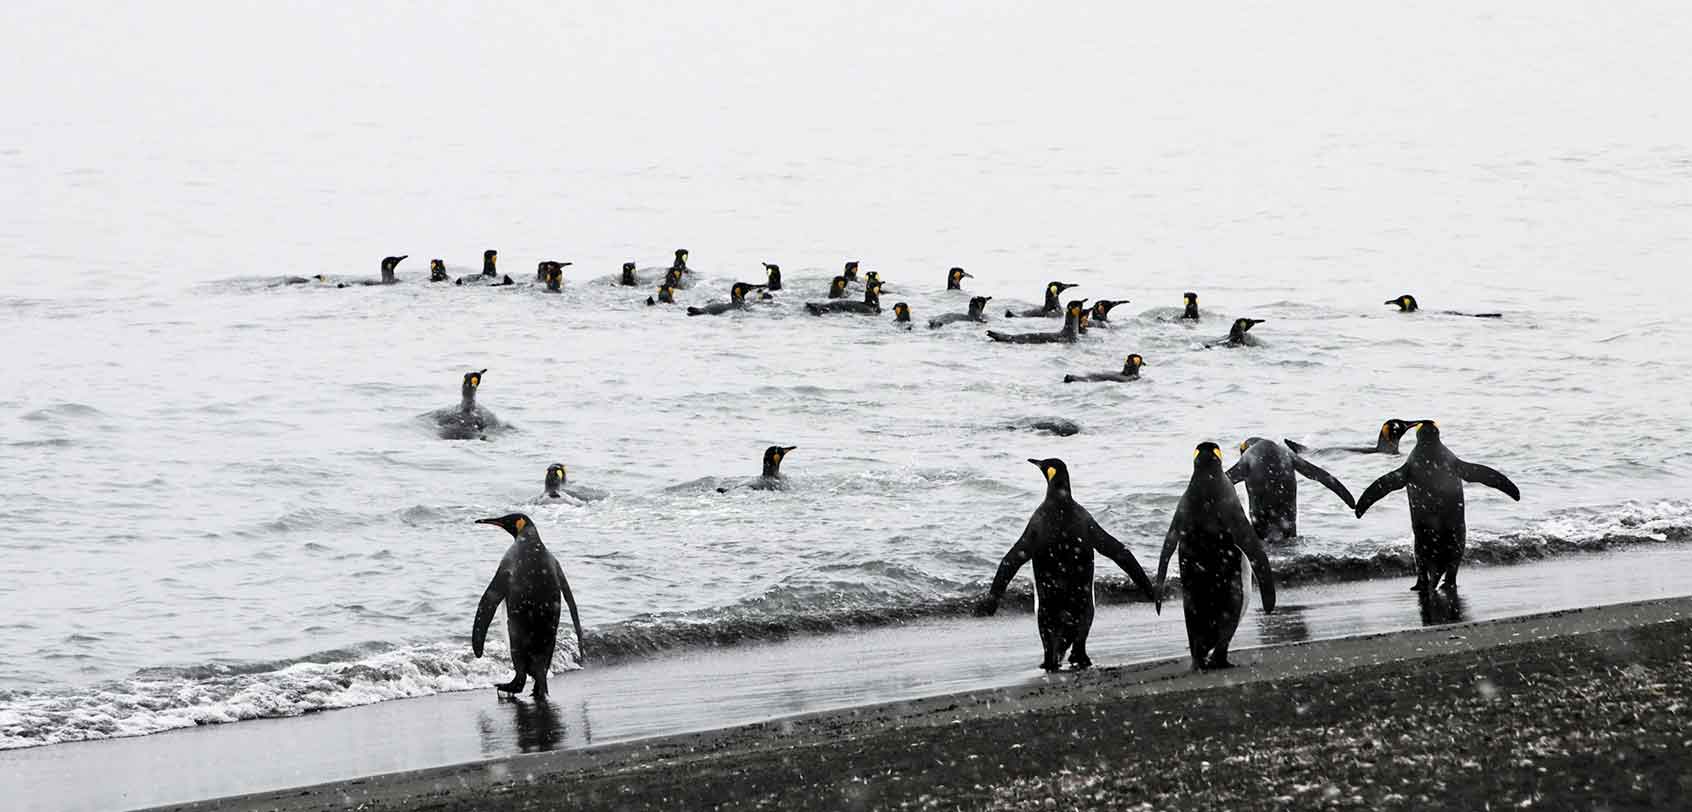 Penguins Swimming